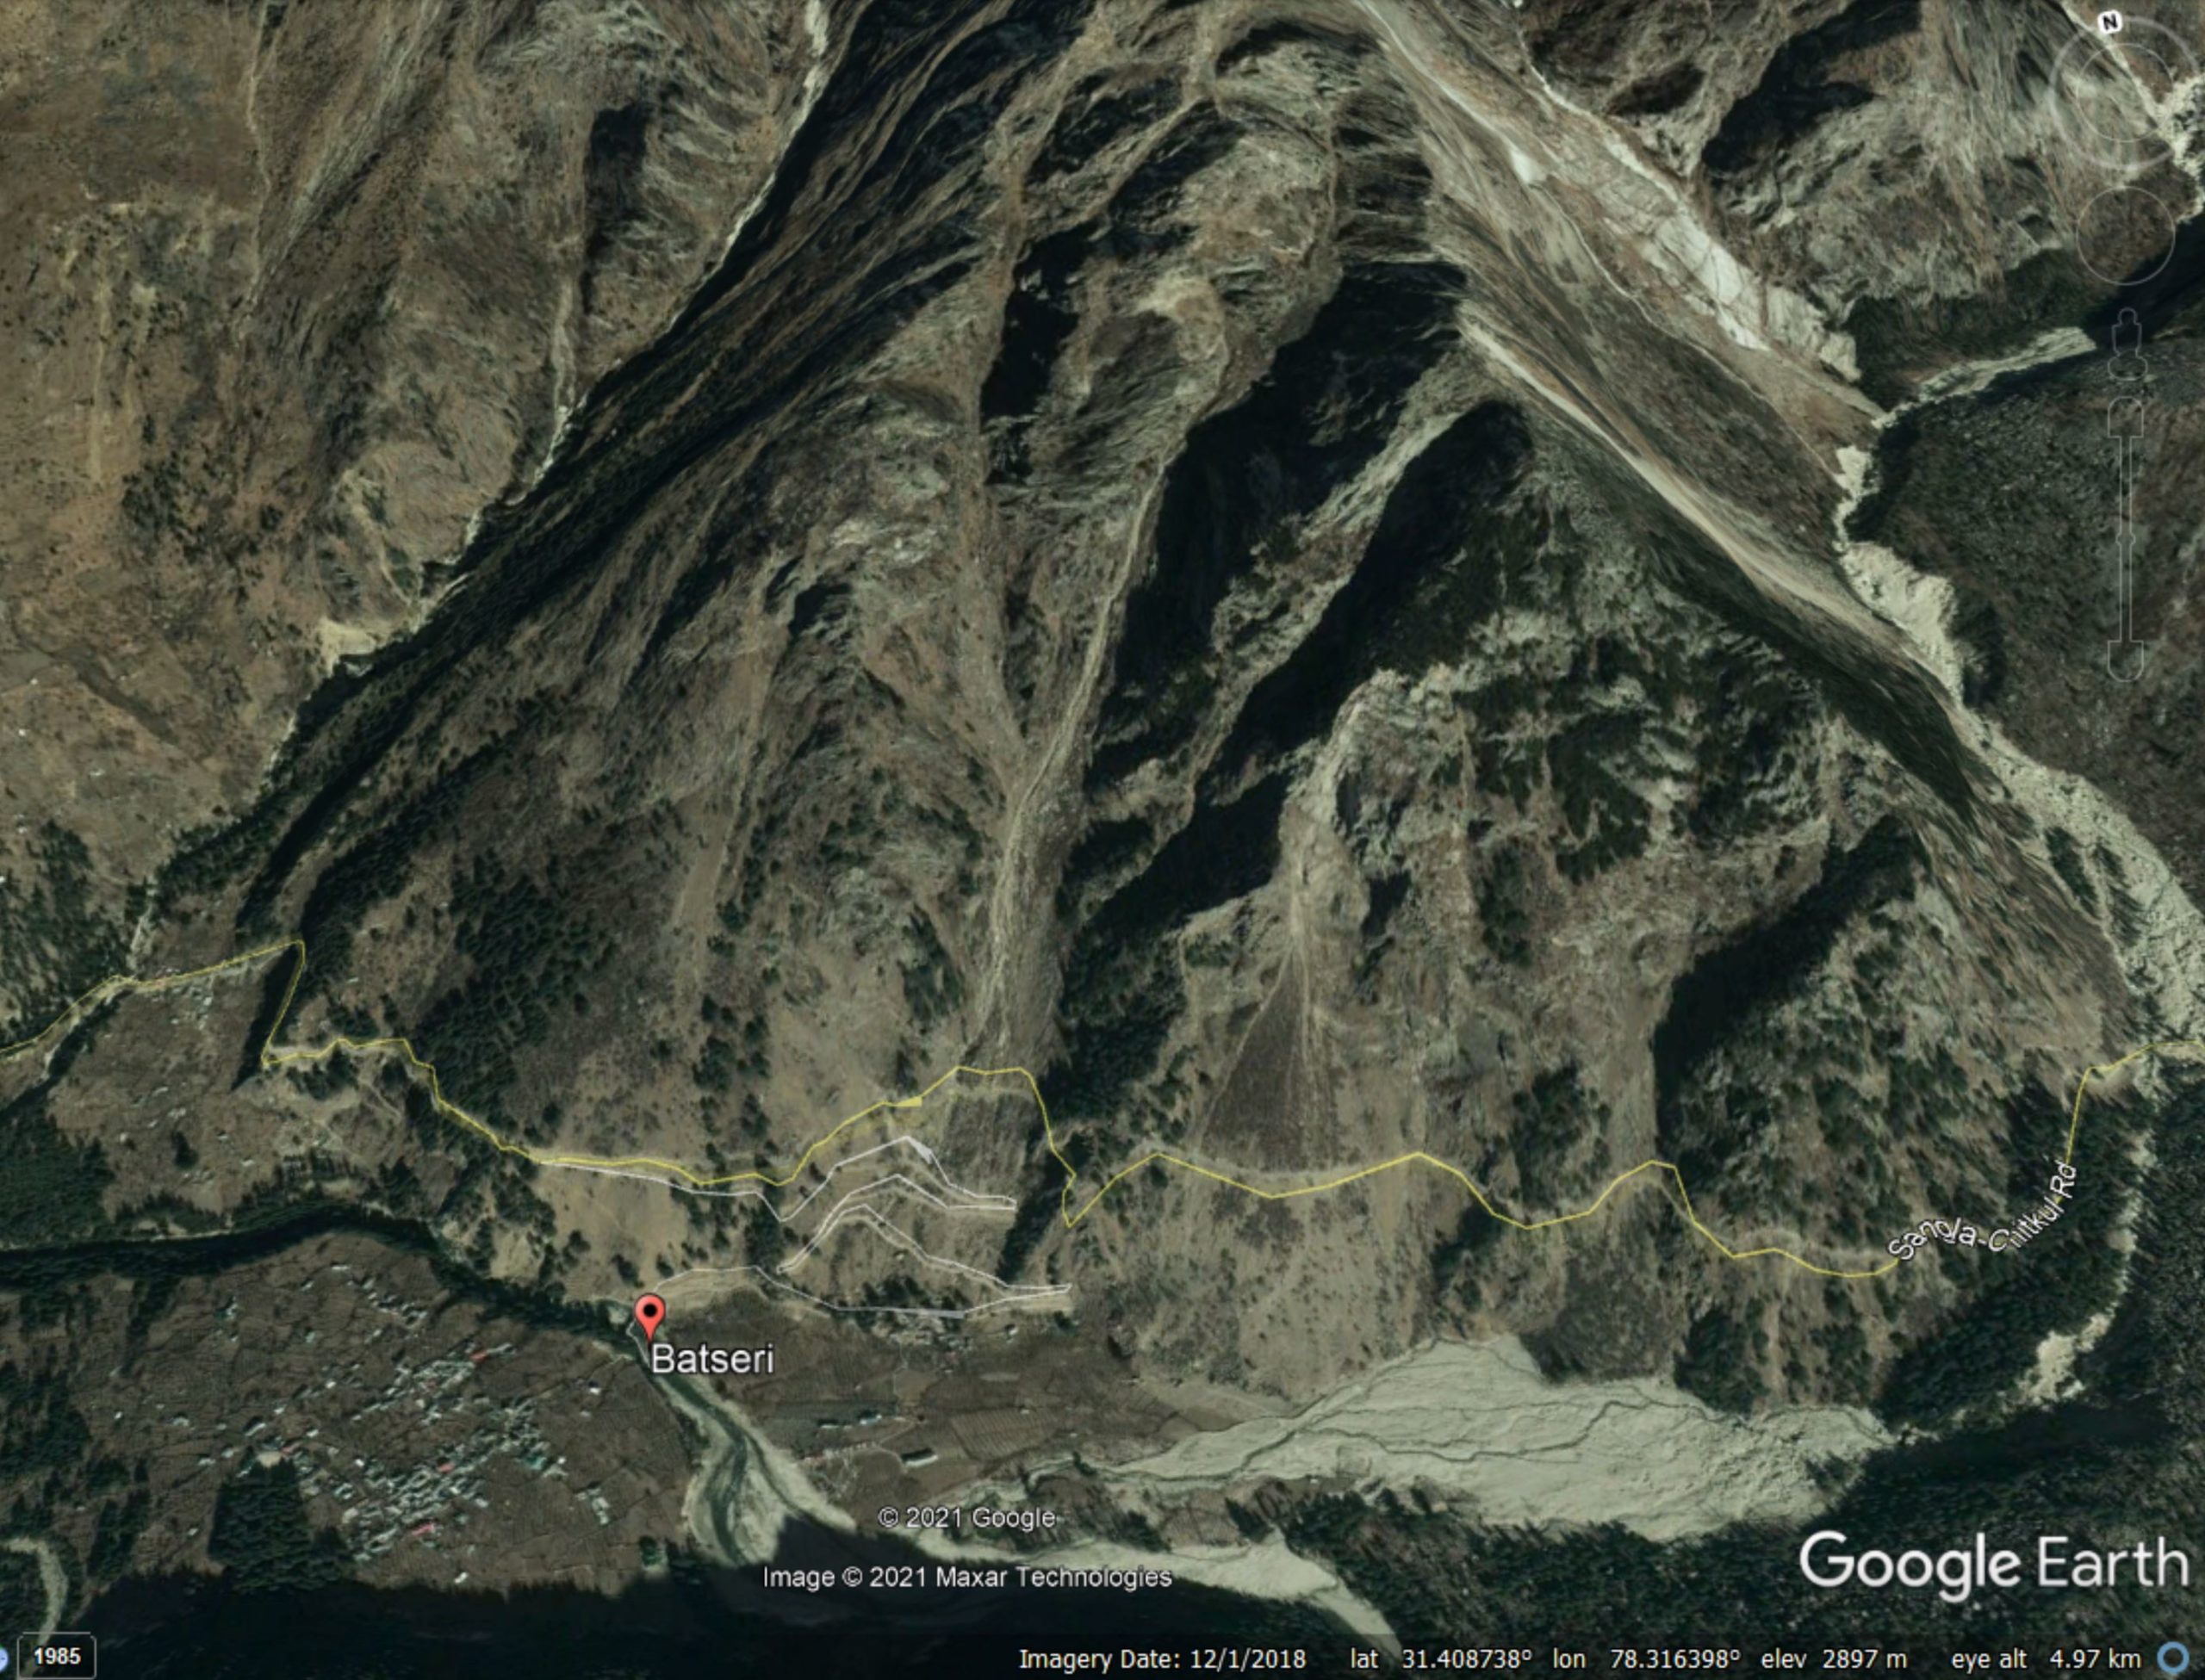 Google Earth view of the terrain at Batseri.